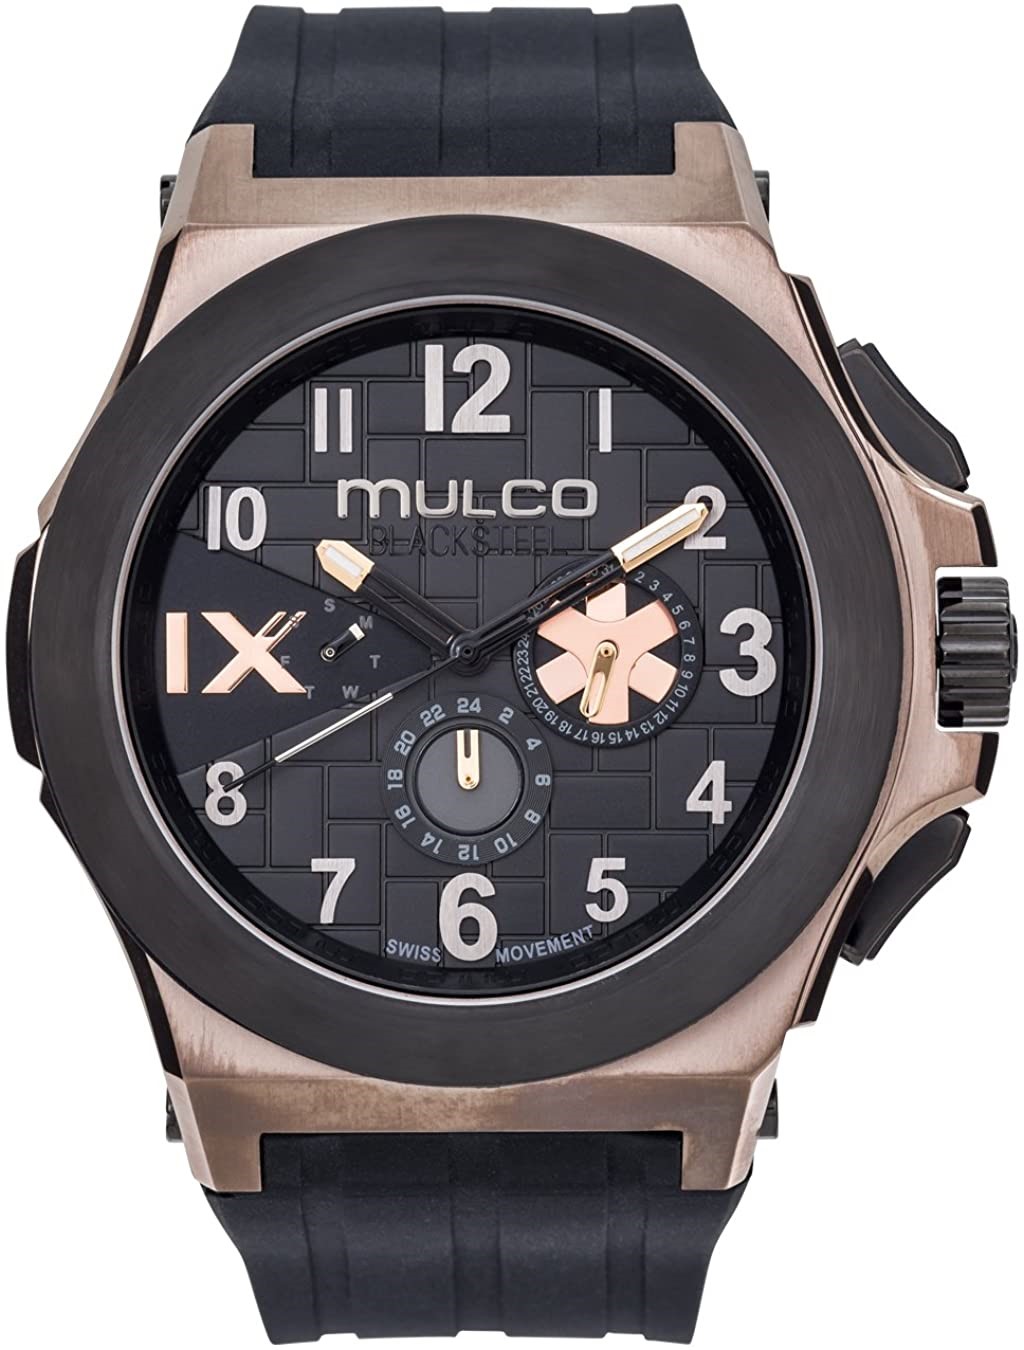 Mulco Blacksteel Swiss Multifunction Movement Men’s Watch